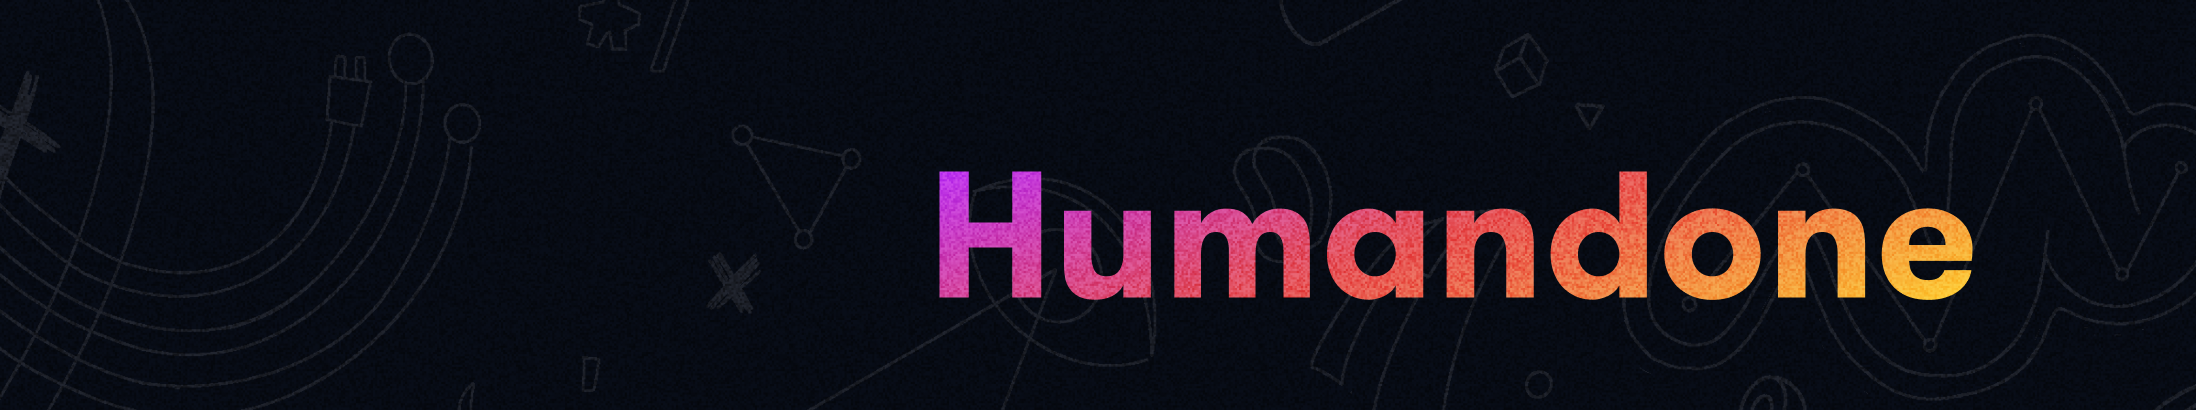 Humandone Team's profile banner